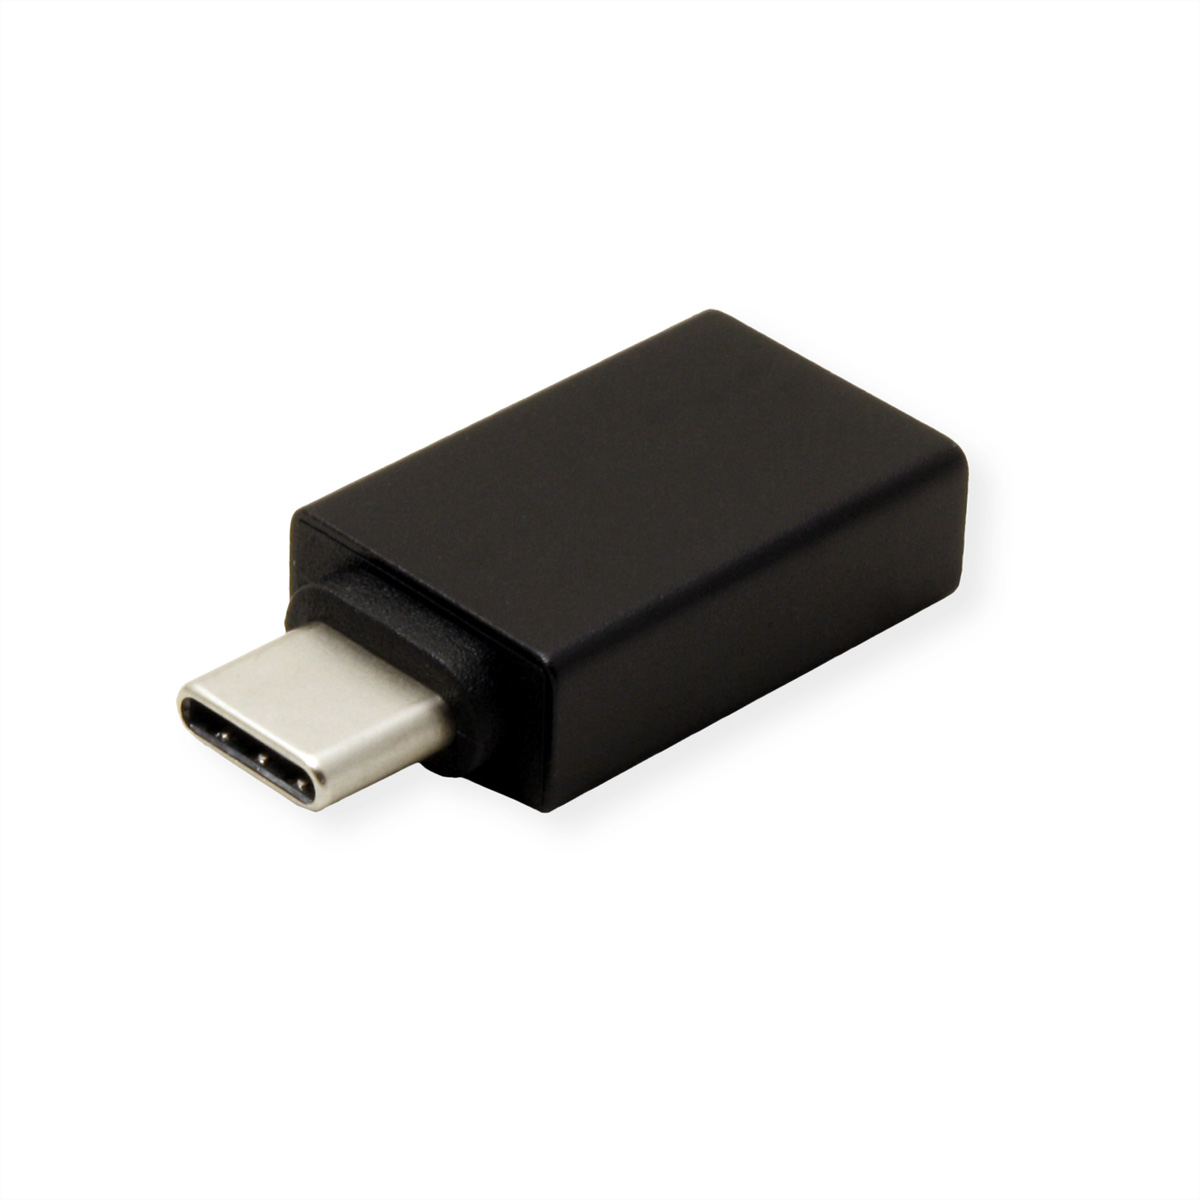 ROLINE USB 3.2 - Adapter, Gen BU/ST USB Adapter USB C, Typ 1 A